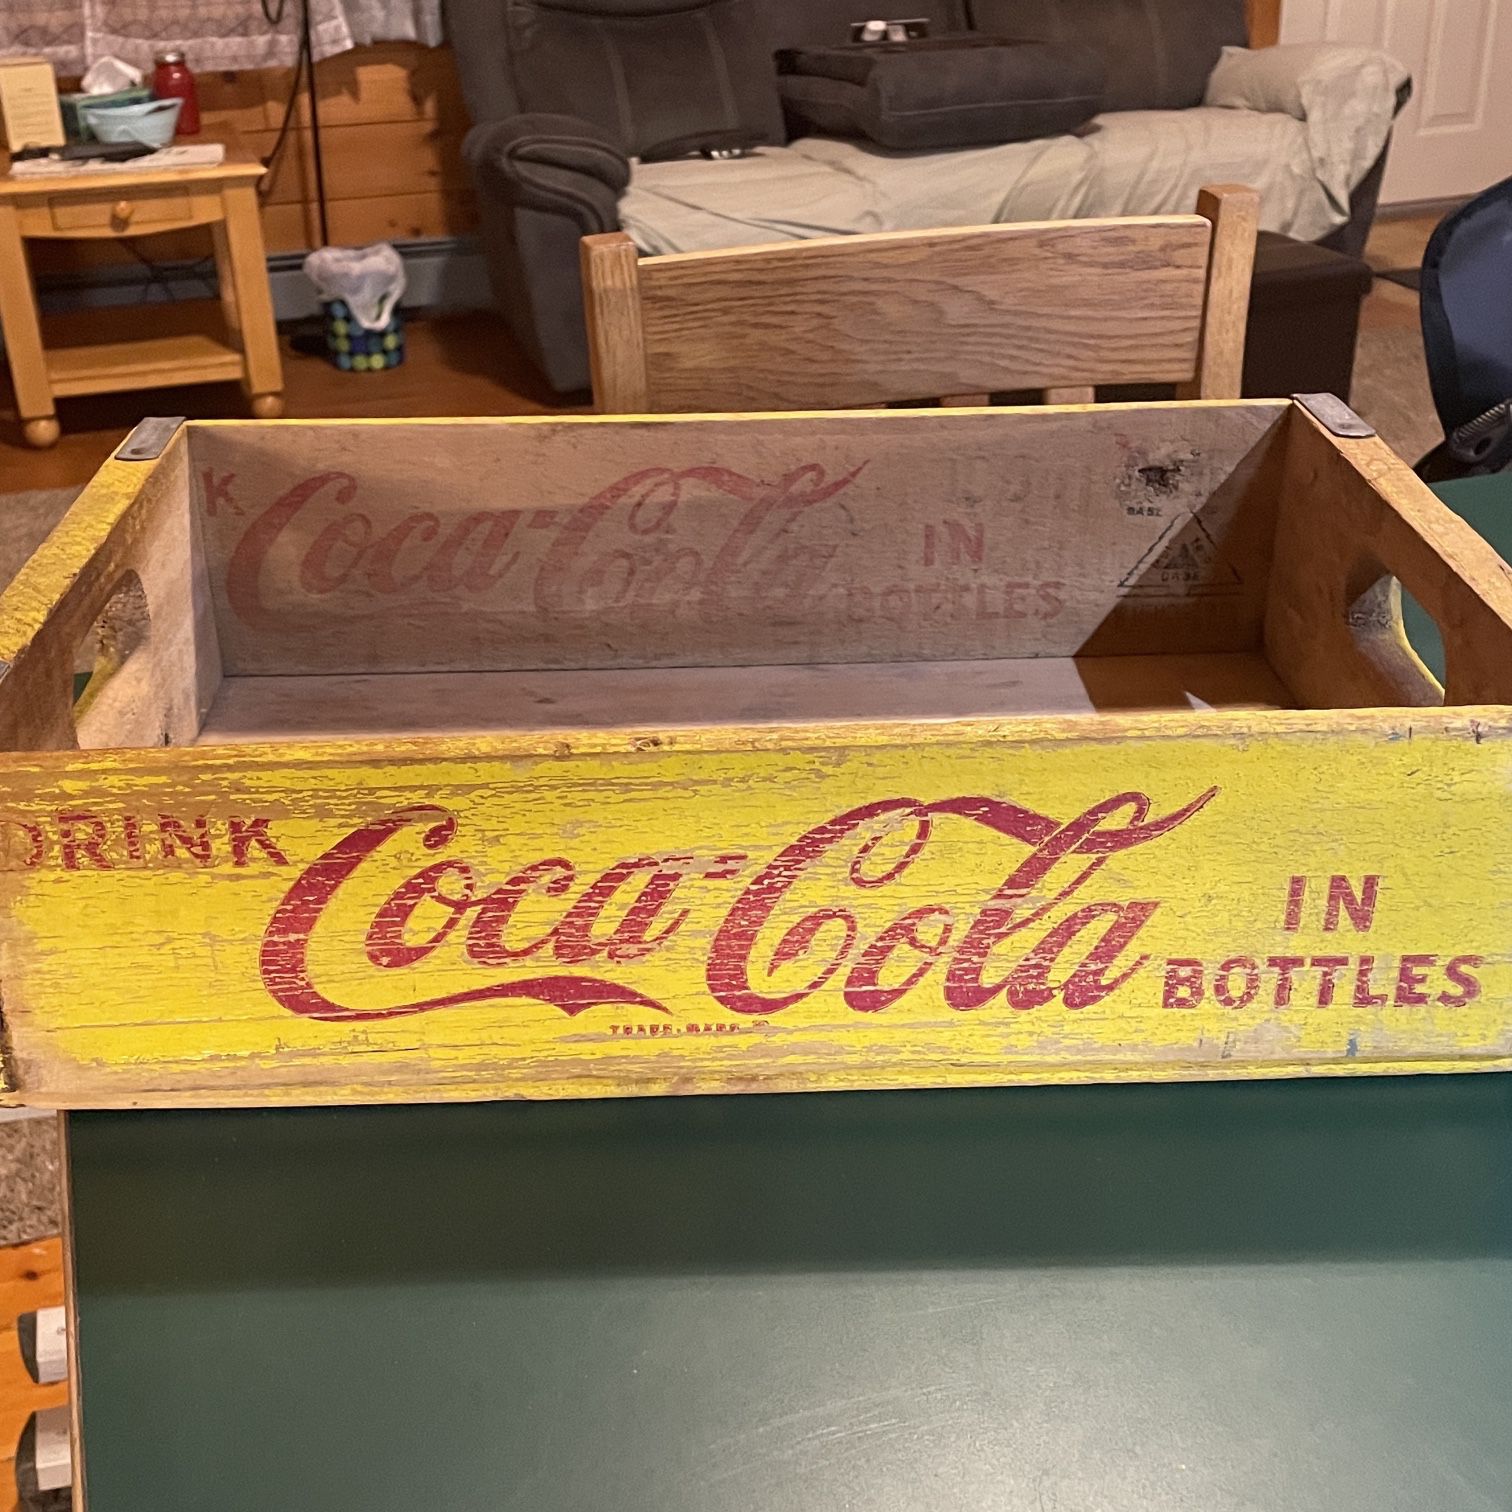  Vintage Coca Cola Bottle Crate